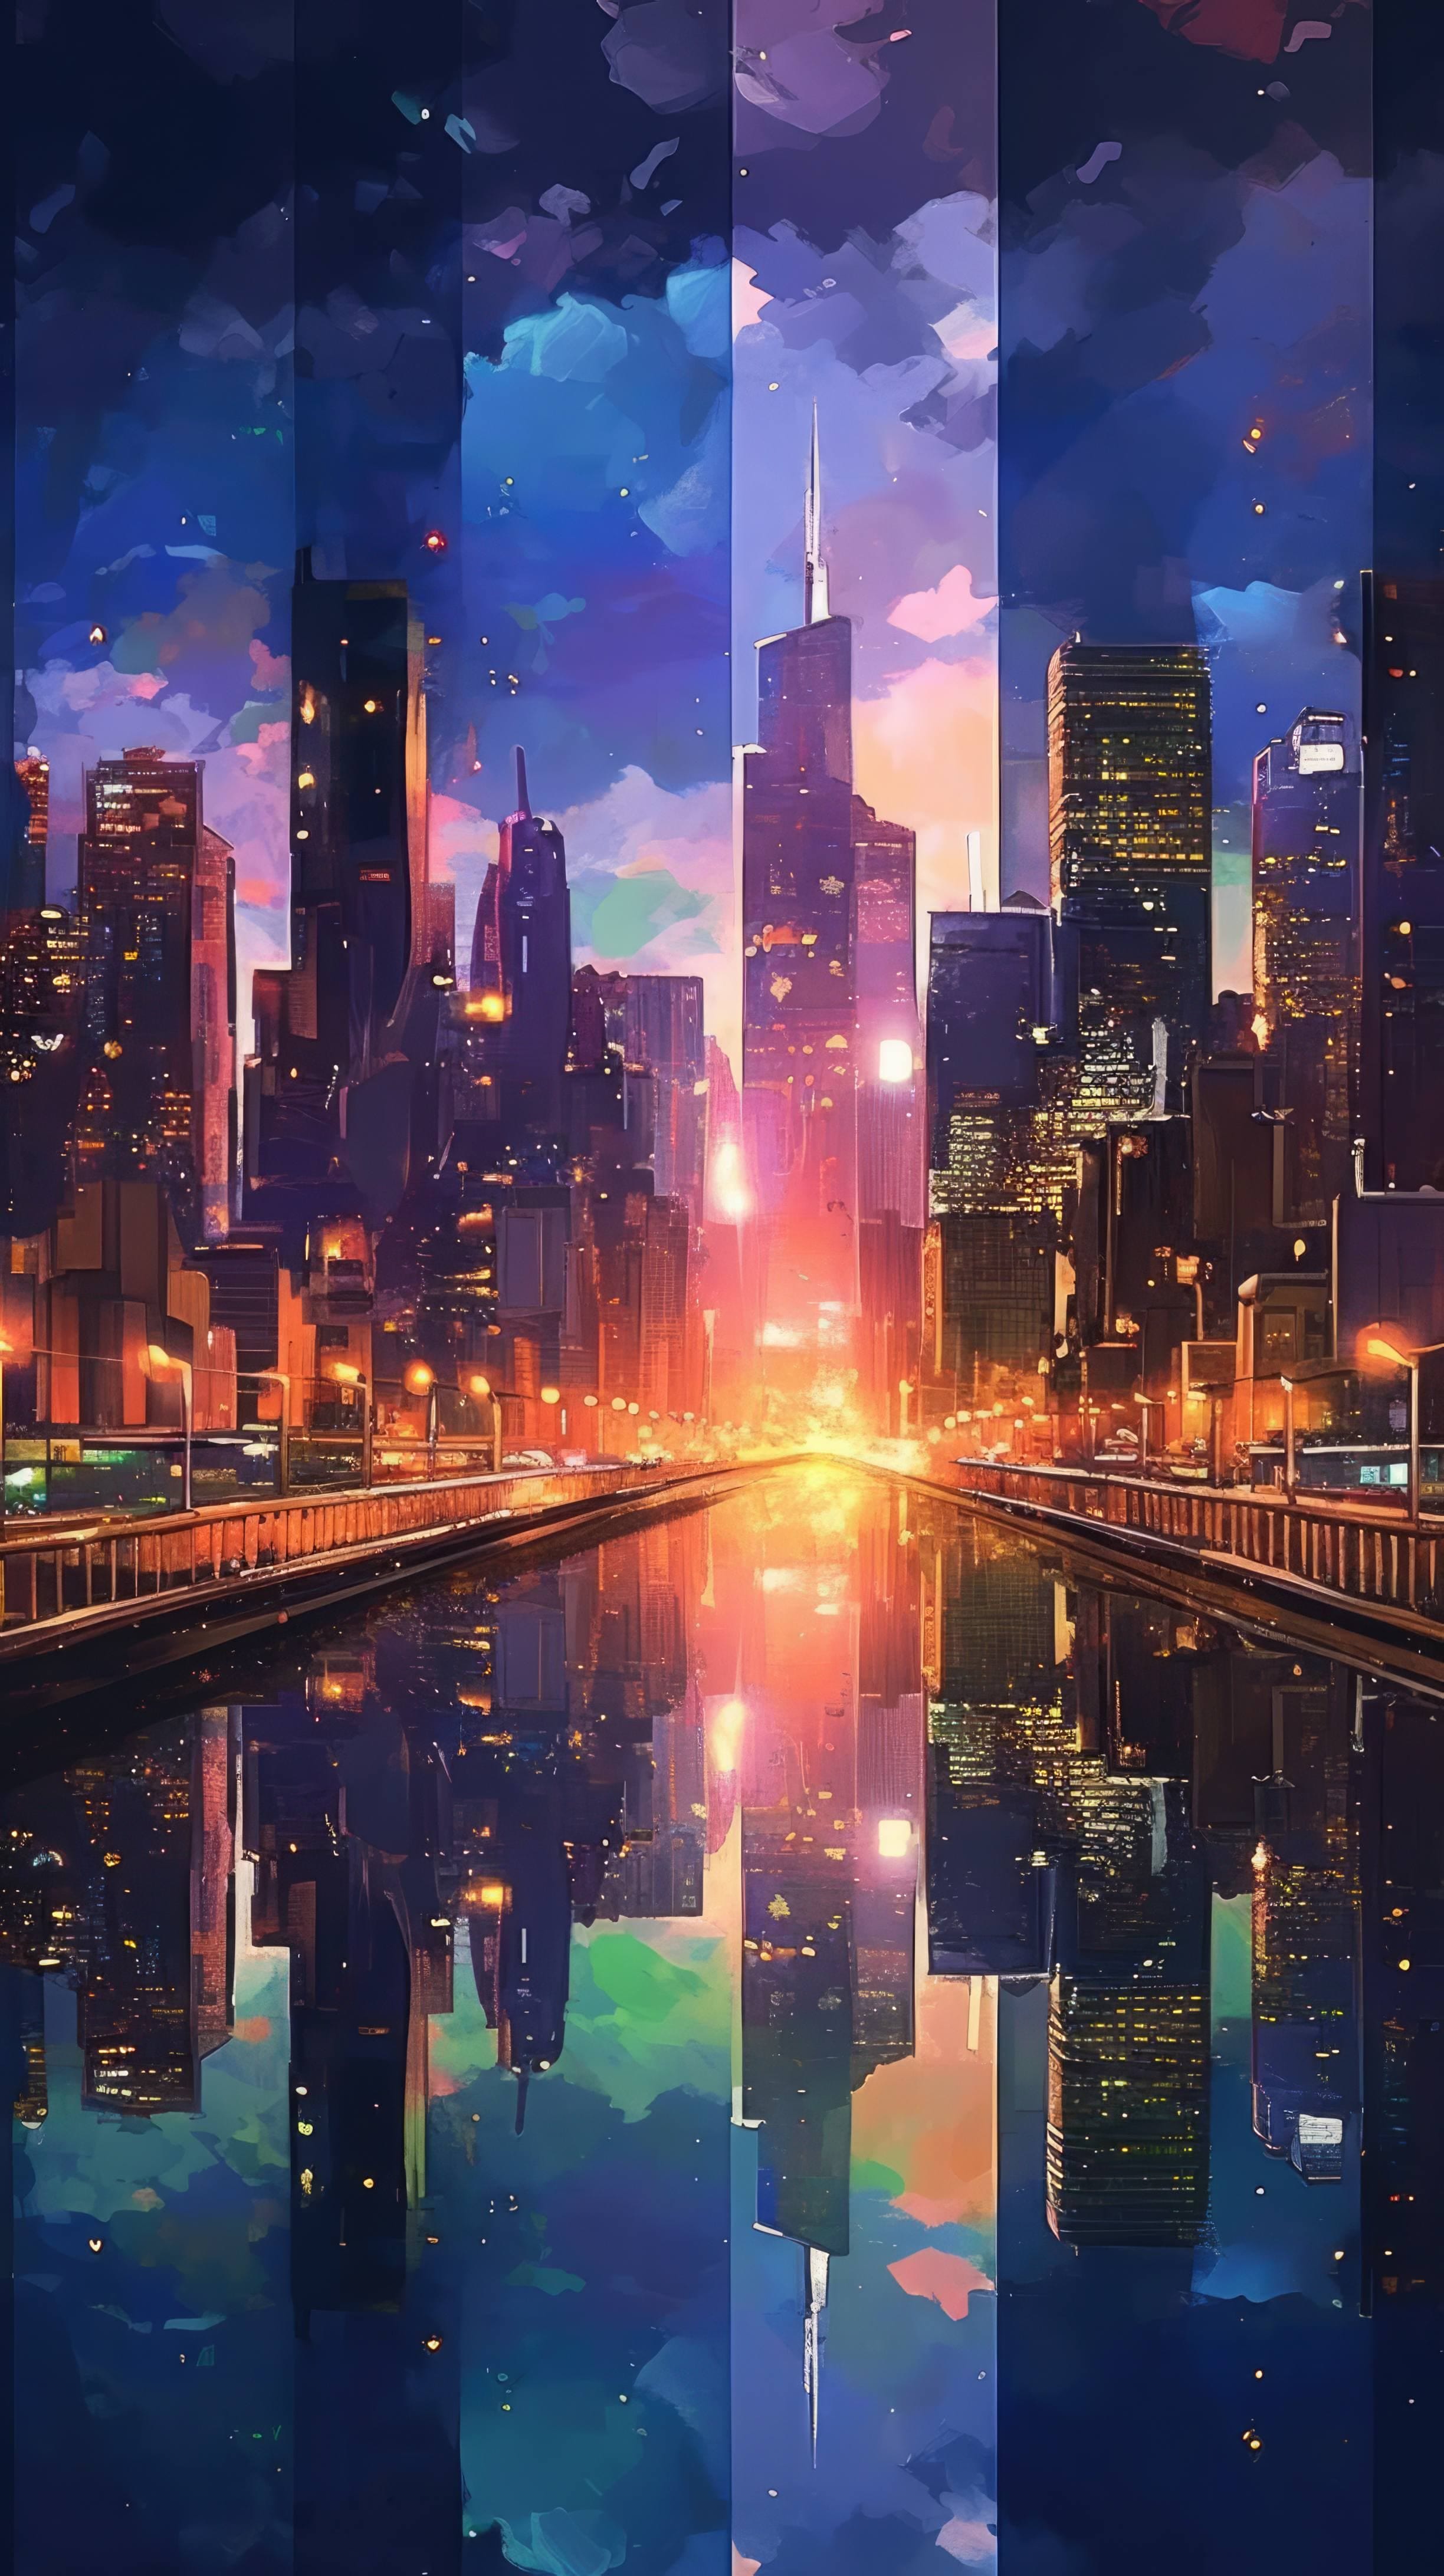 Nighttime cityscape